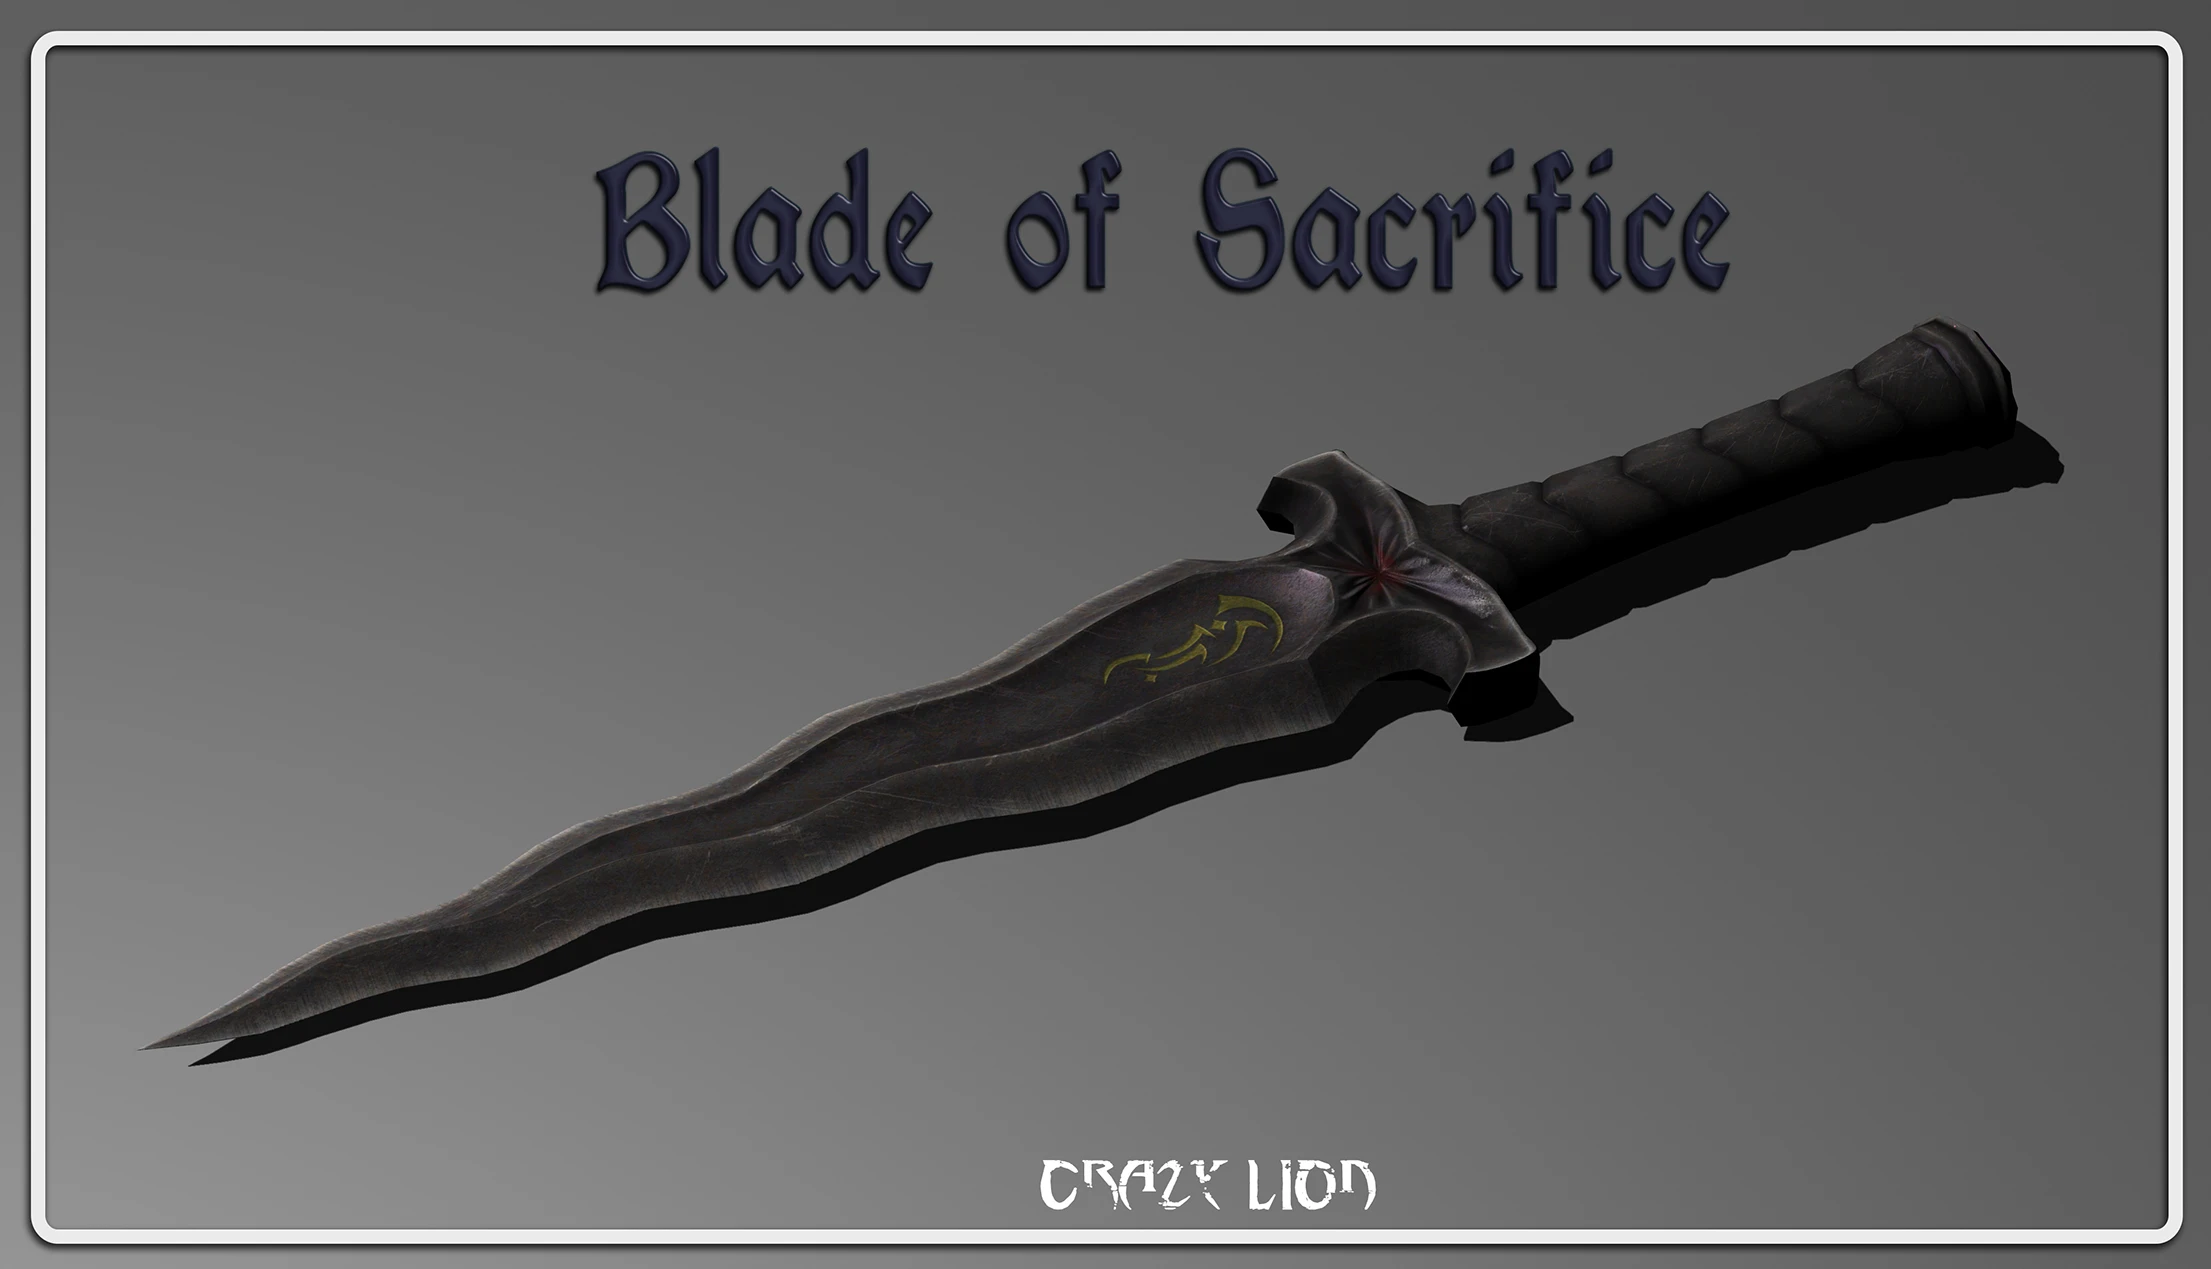 Blade of Sacrifice. crazylion. 